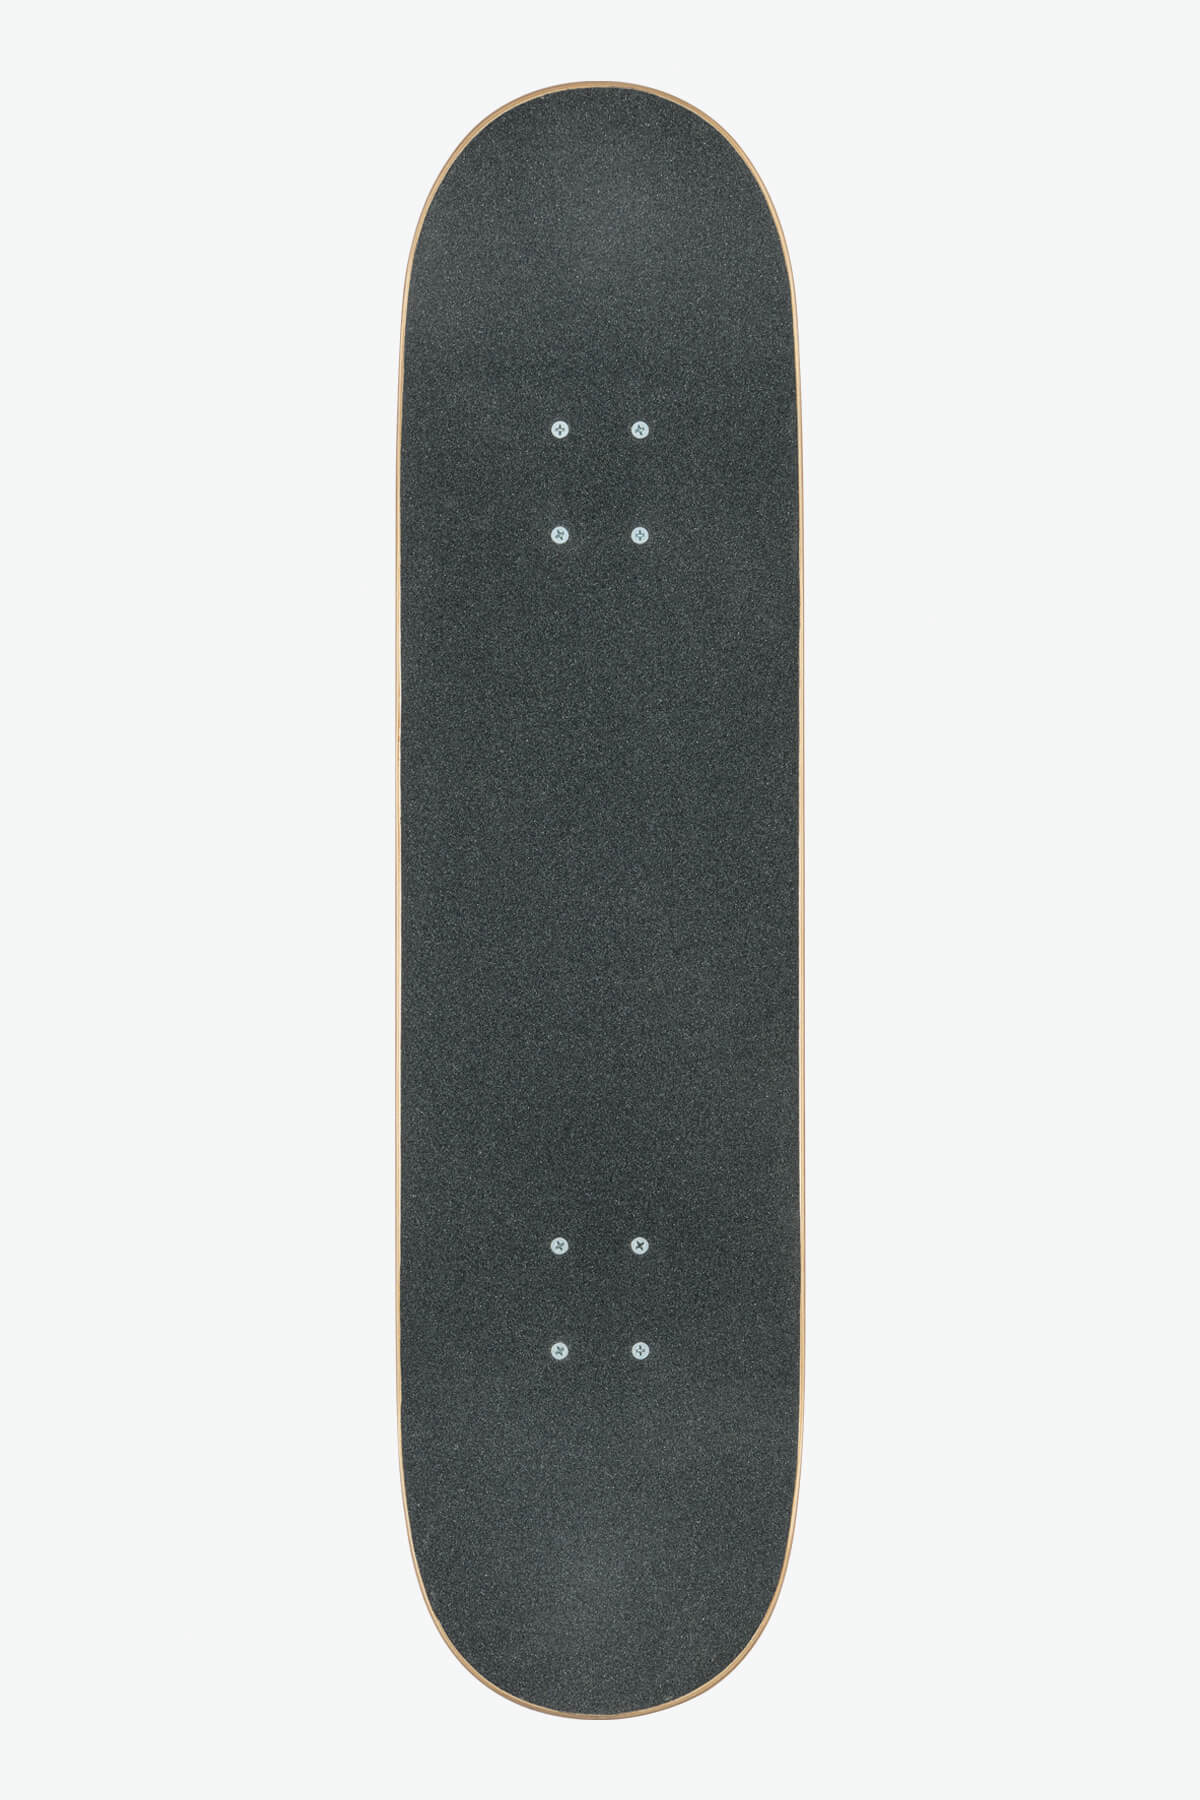 Globe - G0 Fubar - Haze/Off-White - 7.75" Completo Skateboard